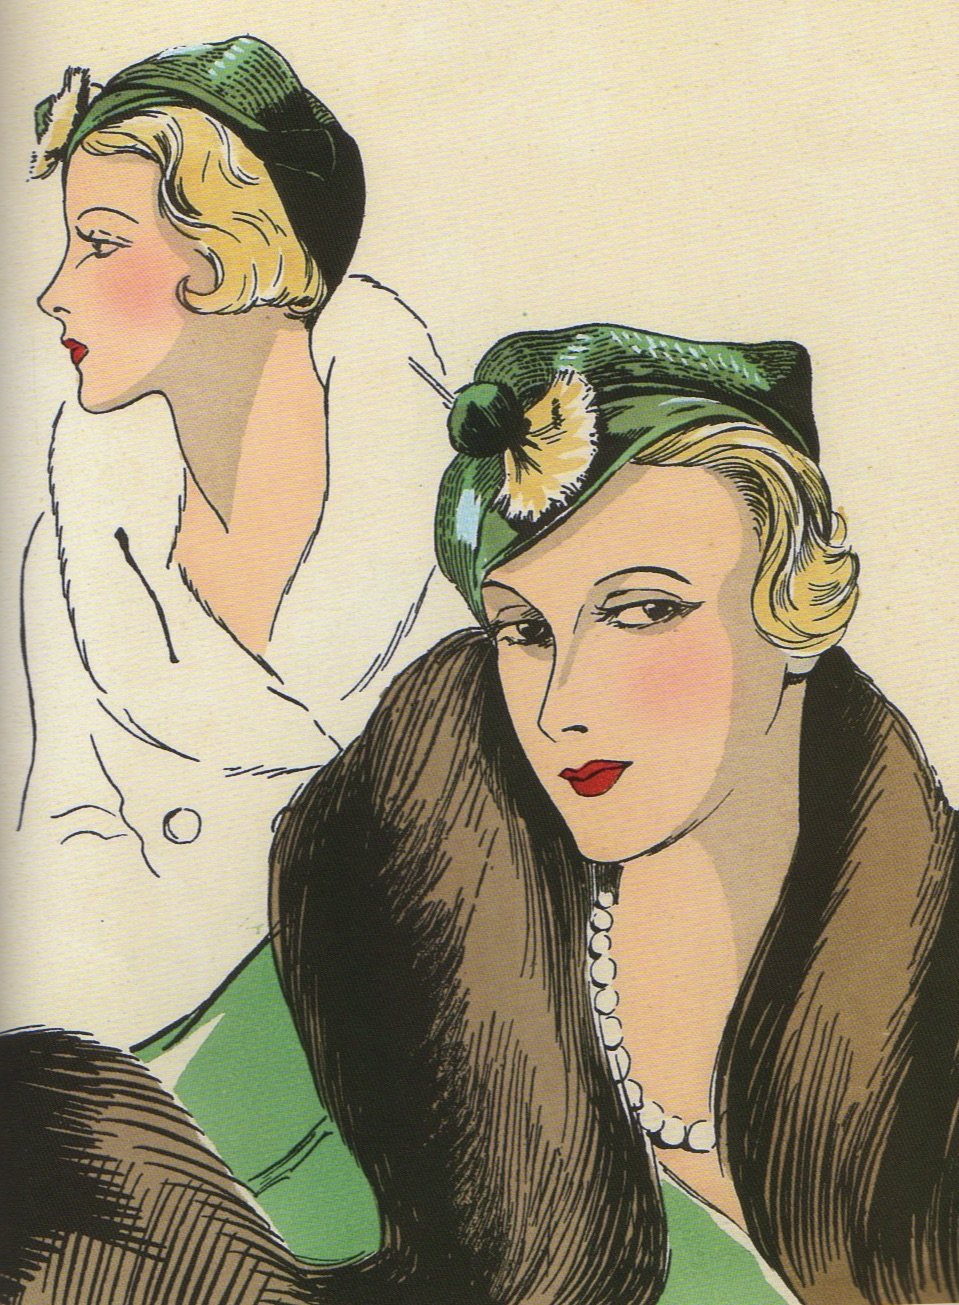 Stylish 1930s fashion accessories, 1939.